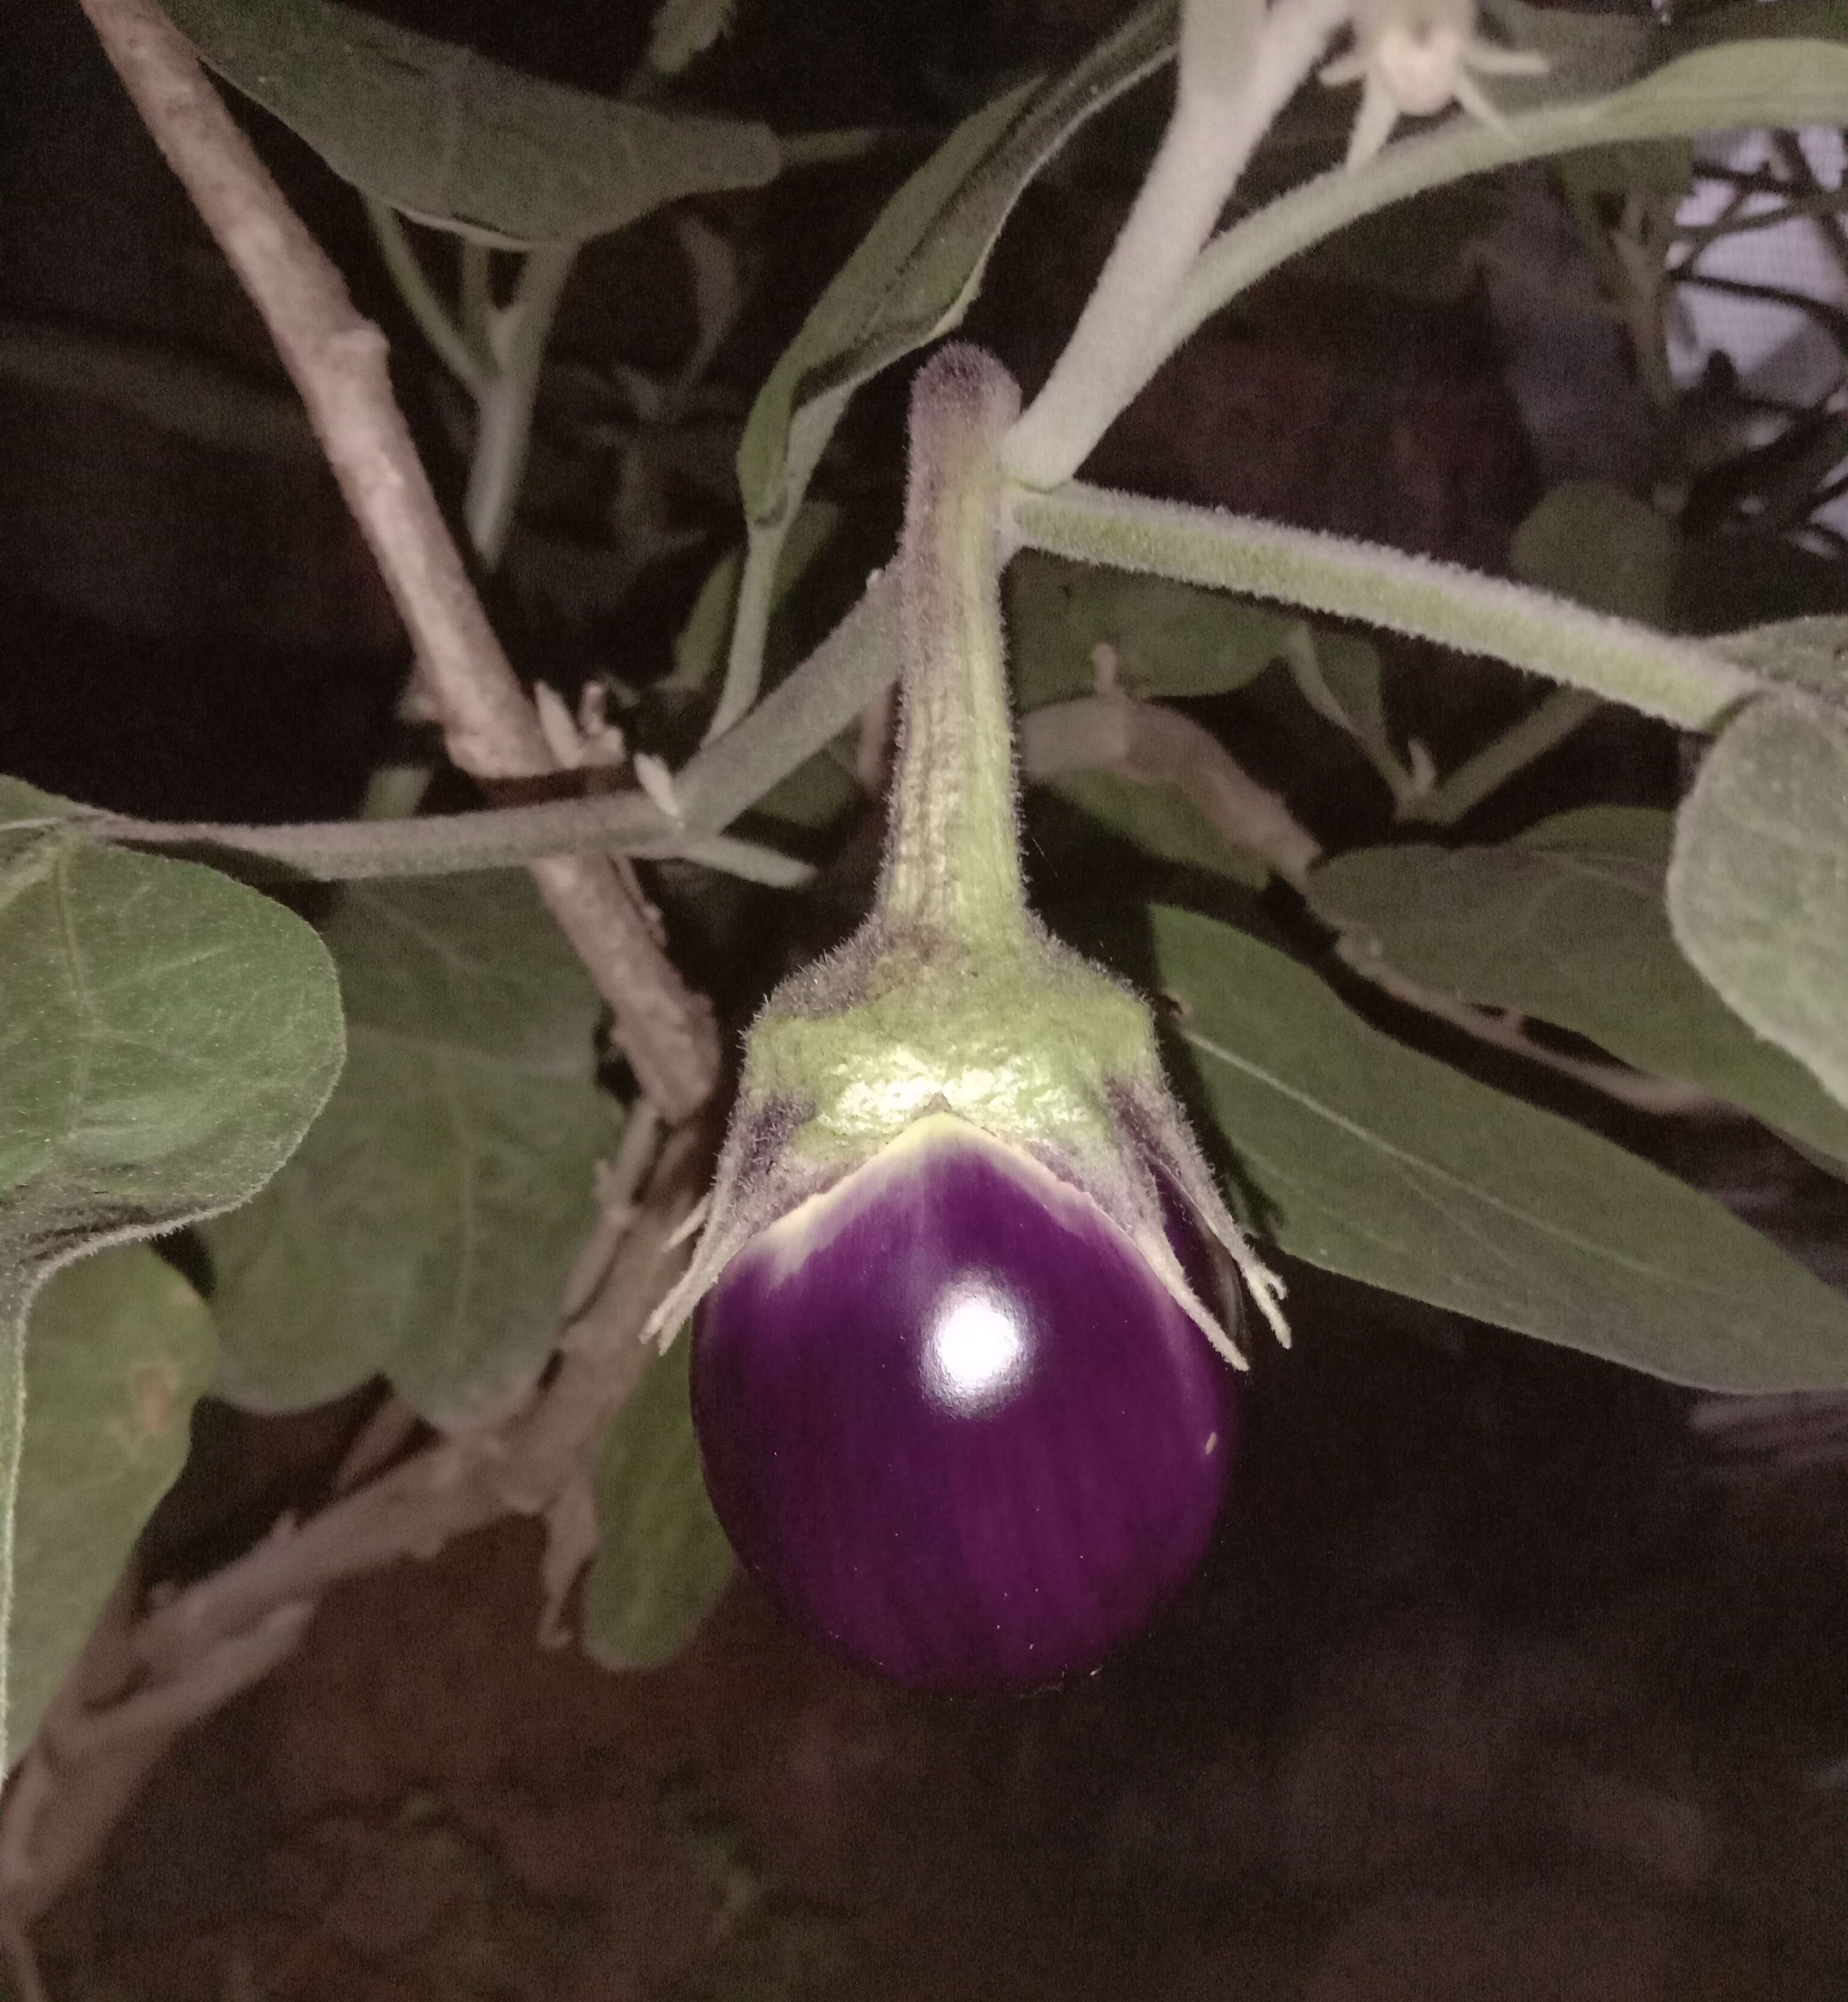 Image of eggplant